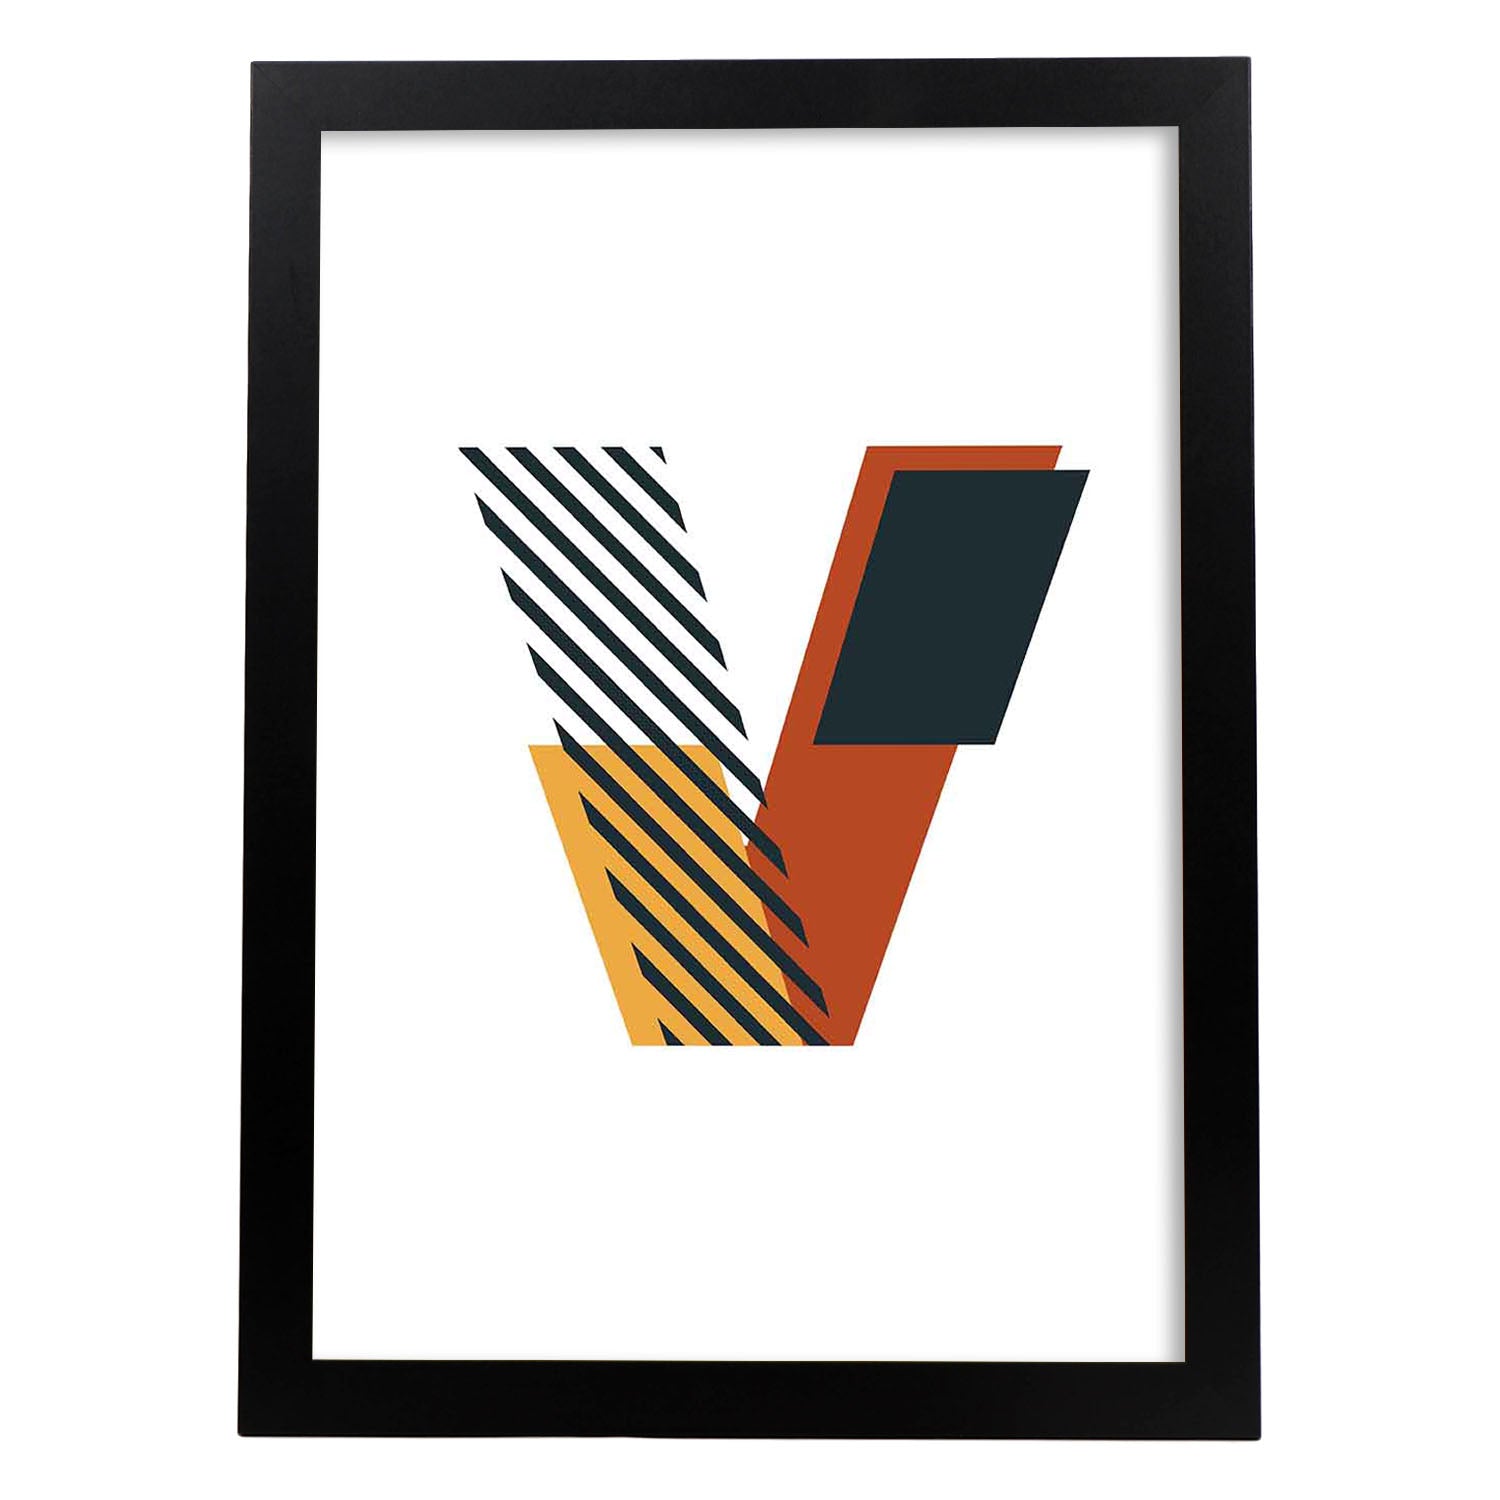 Poster de letra V. Lámina estilo Geometria con imágenes del alfabeto.-Artwork-Nacnic-A3-Marco Negro-Nacnic Estudio SL